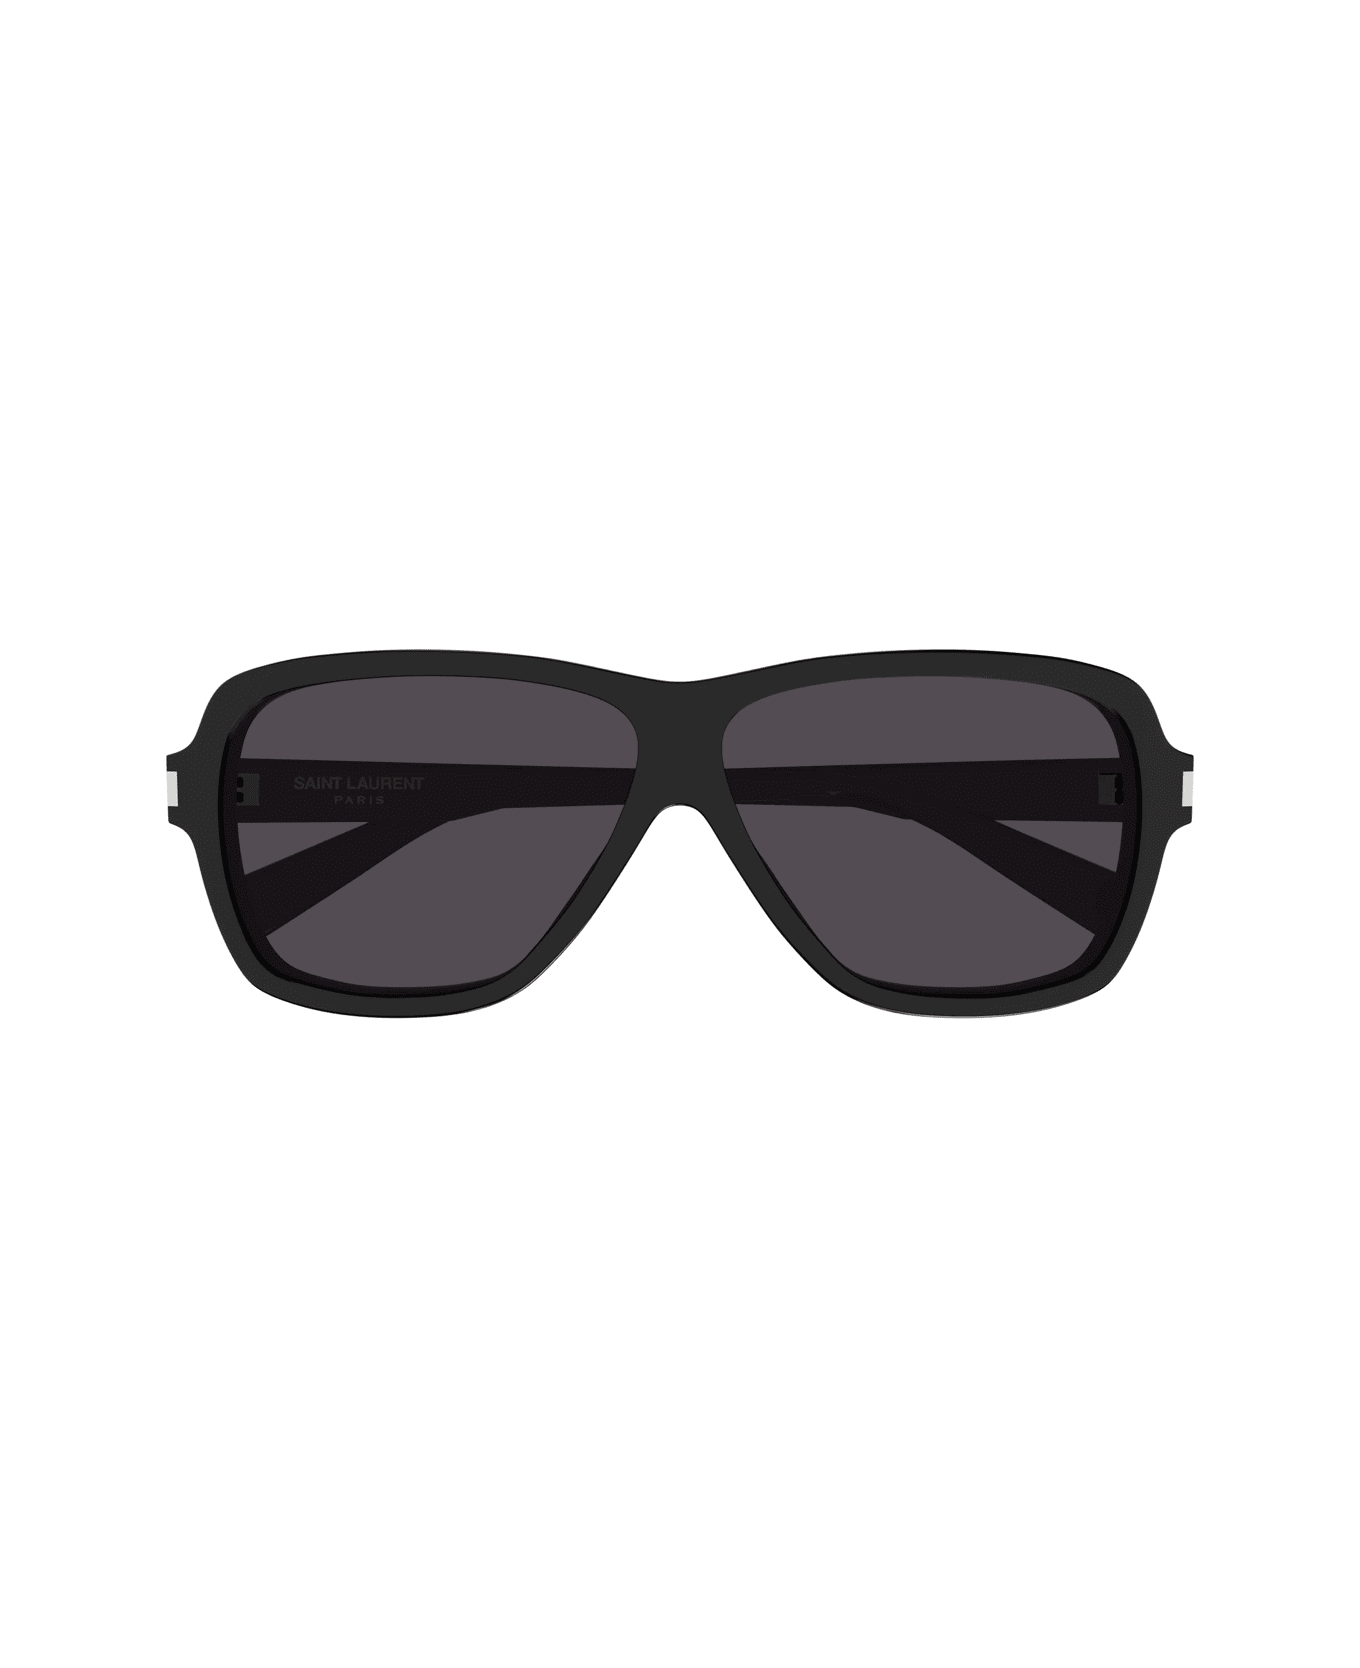 Saint Laurent Eyewear Sl 609 Carolyn 001 Sunglasses nod - Nero